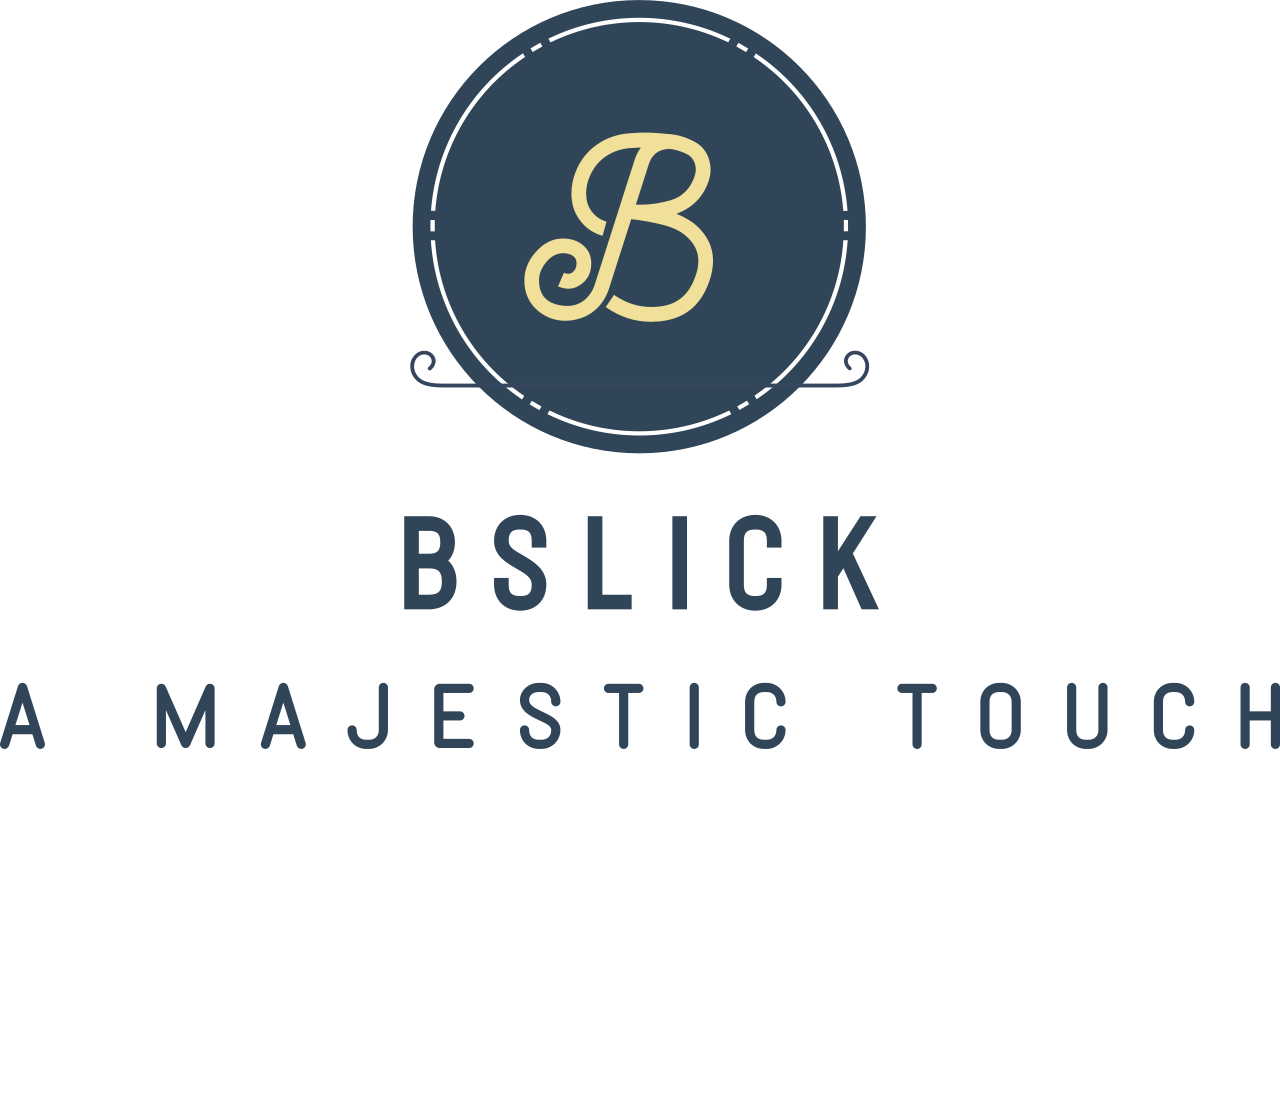 Bslick's logo